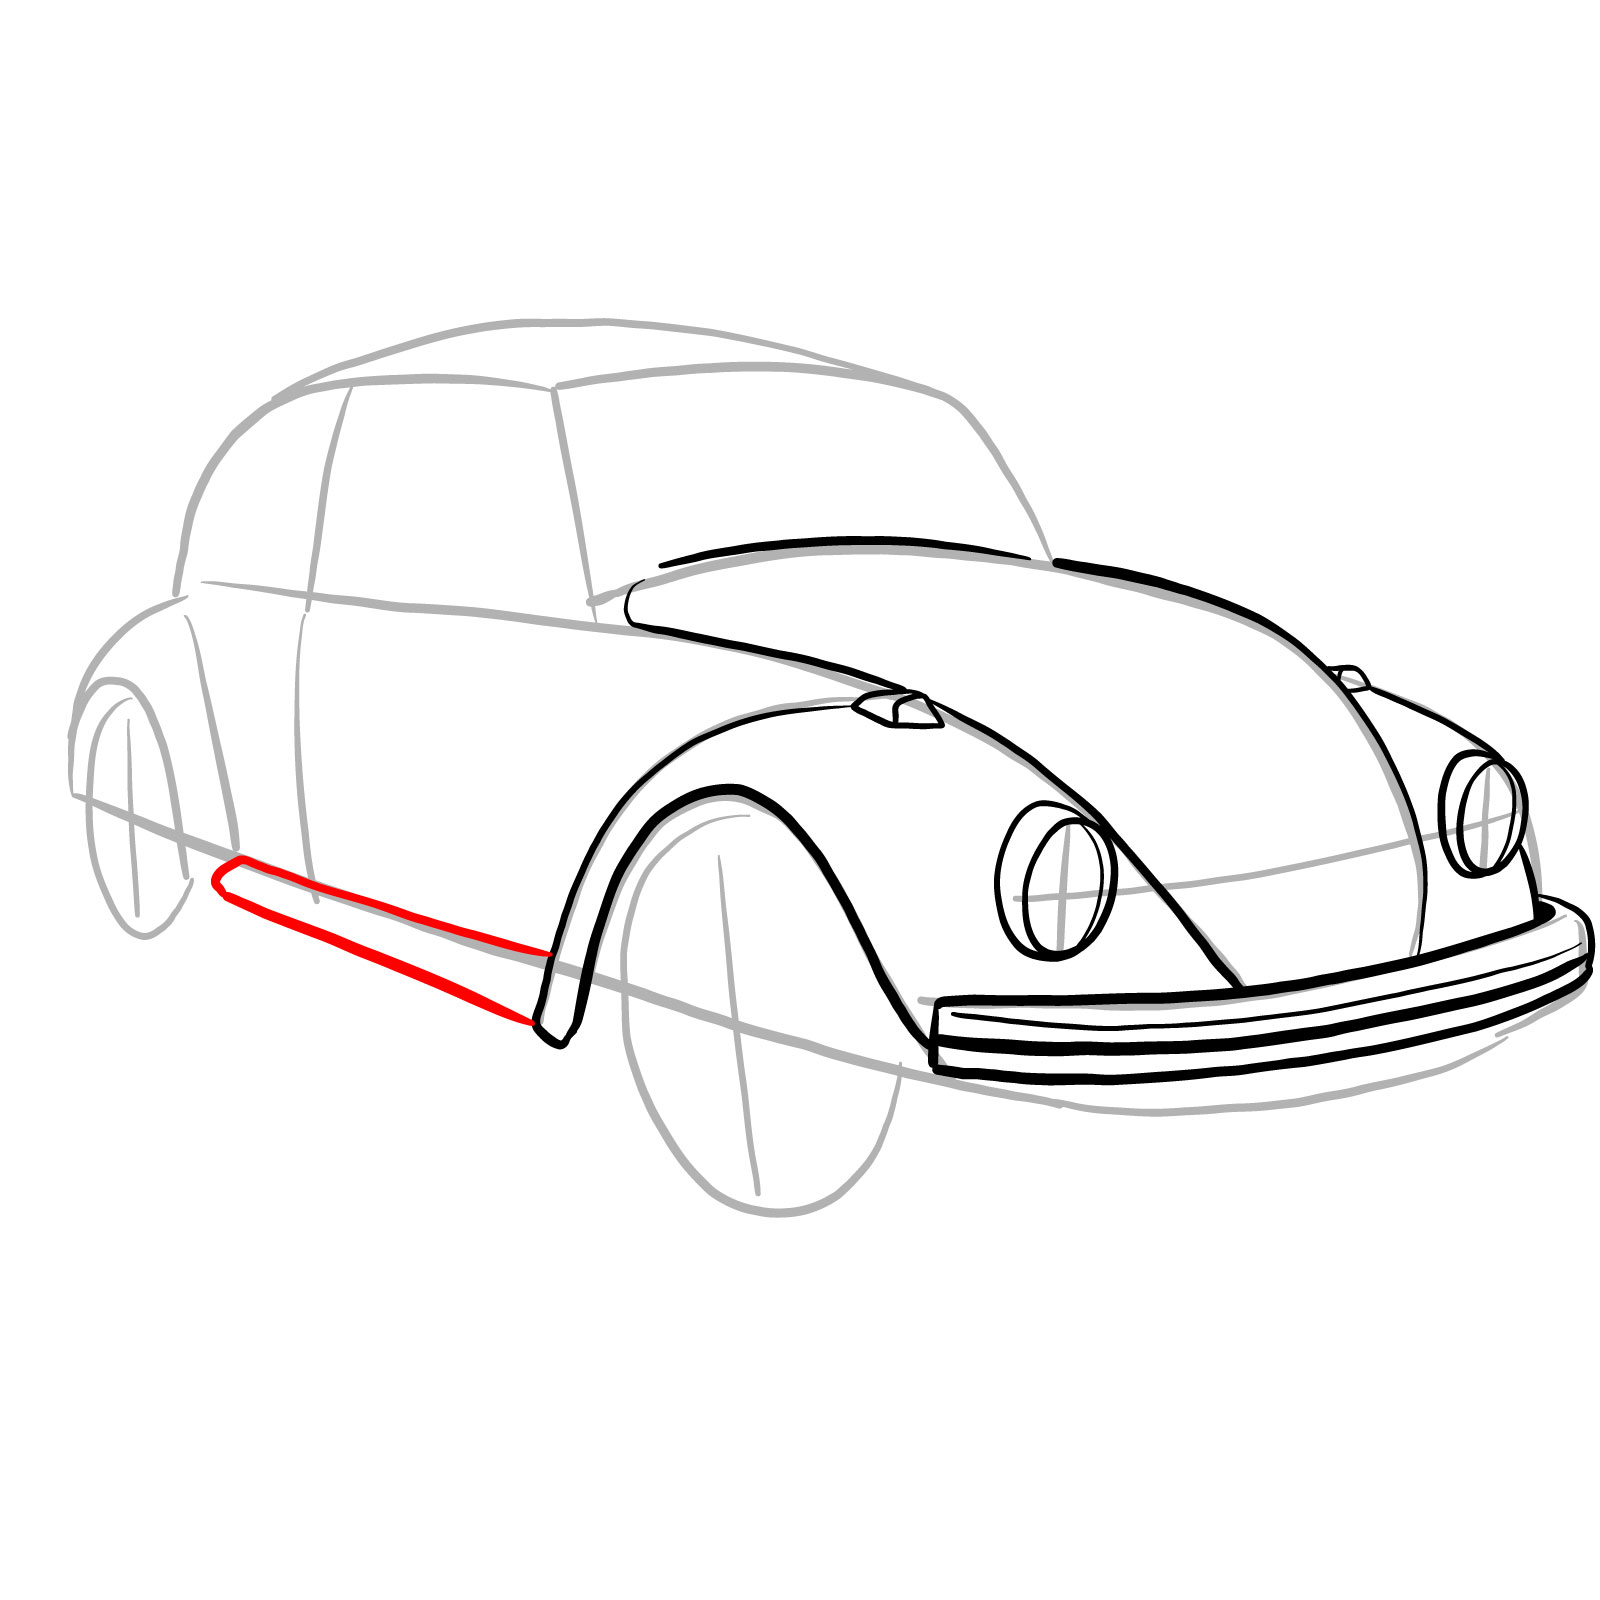 How to draw Volkswagen Beetle 1972 - step 15